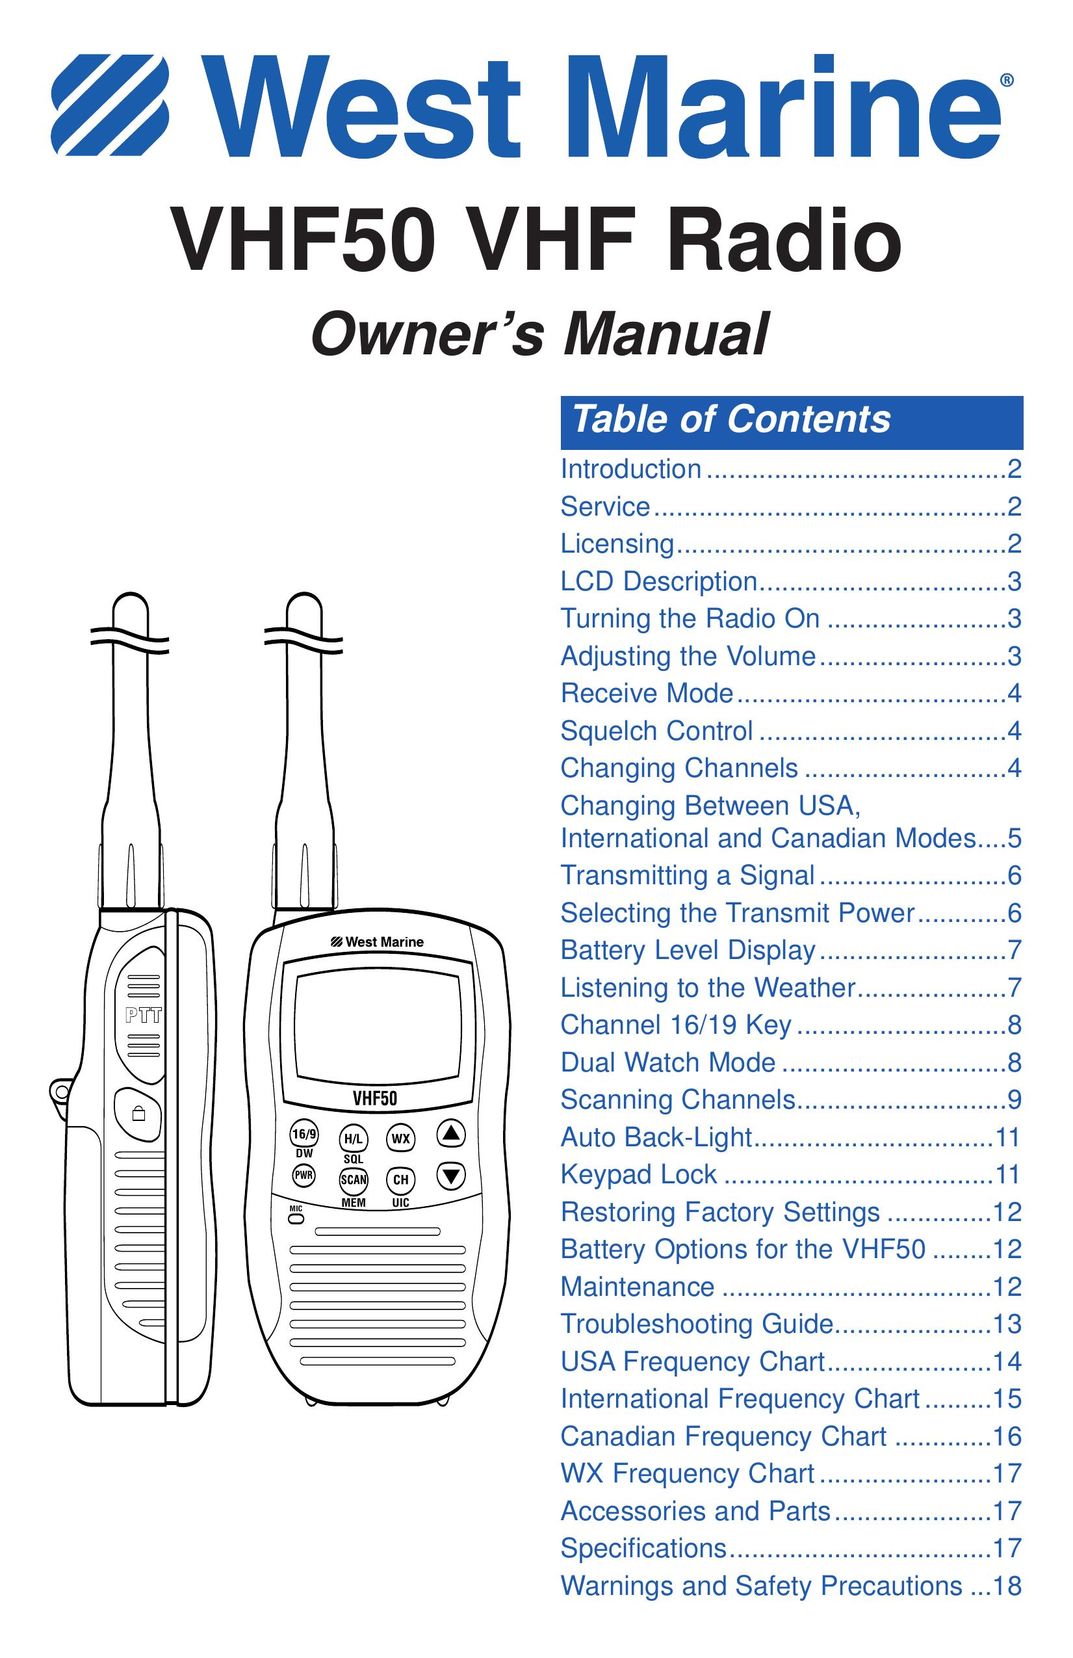 West Marine VHF50 Portable Radio User Manual